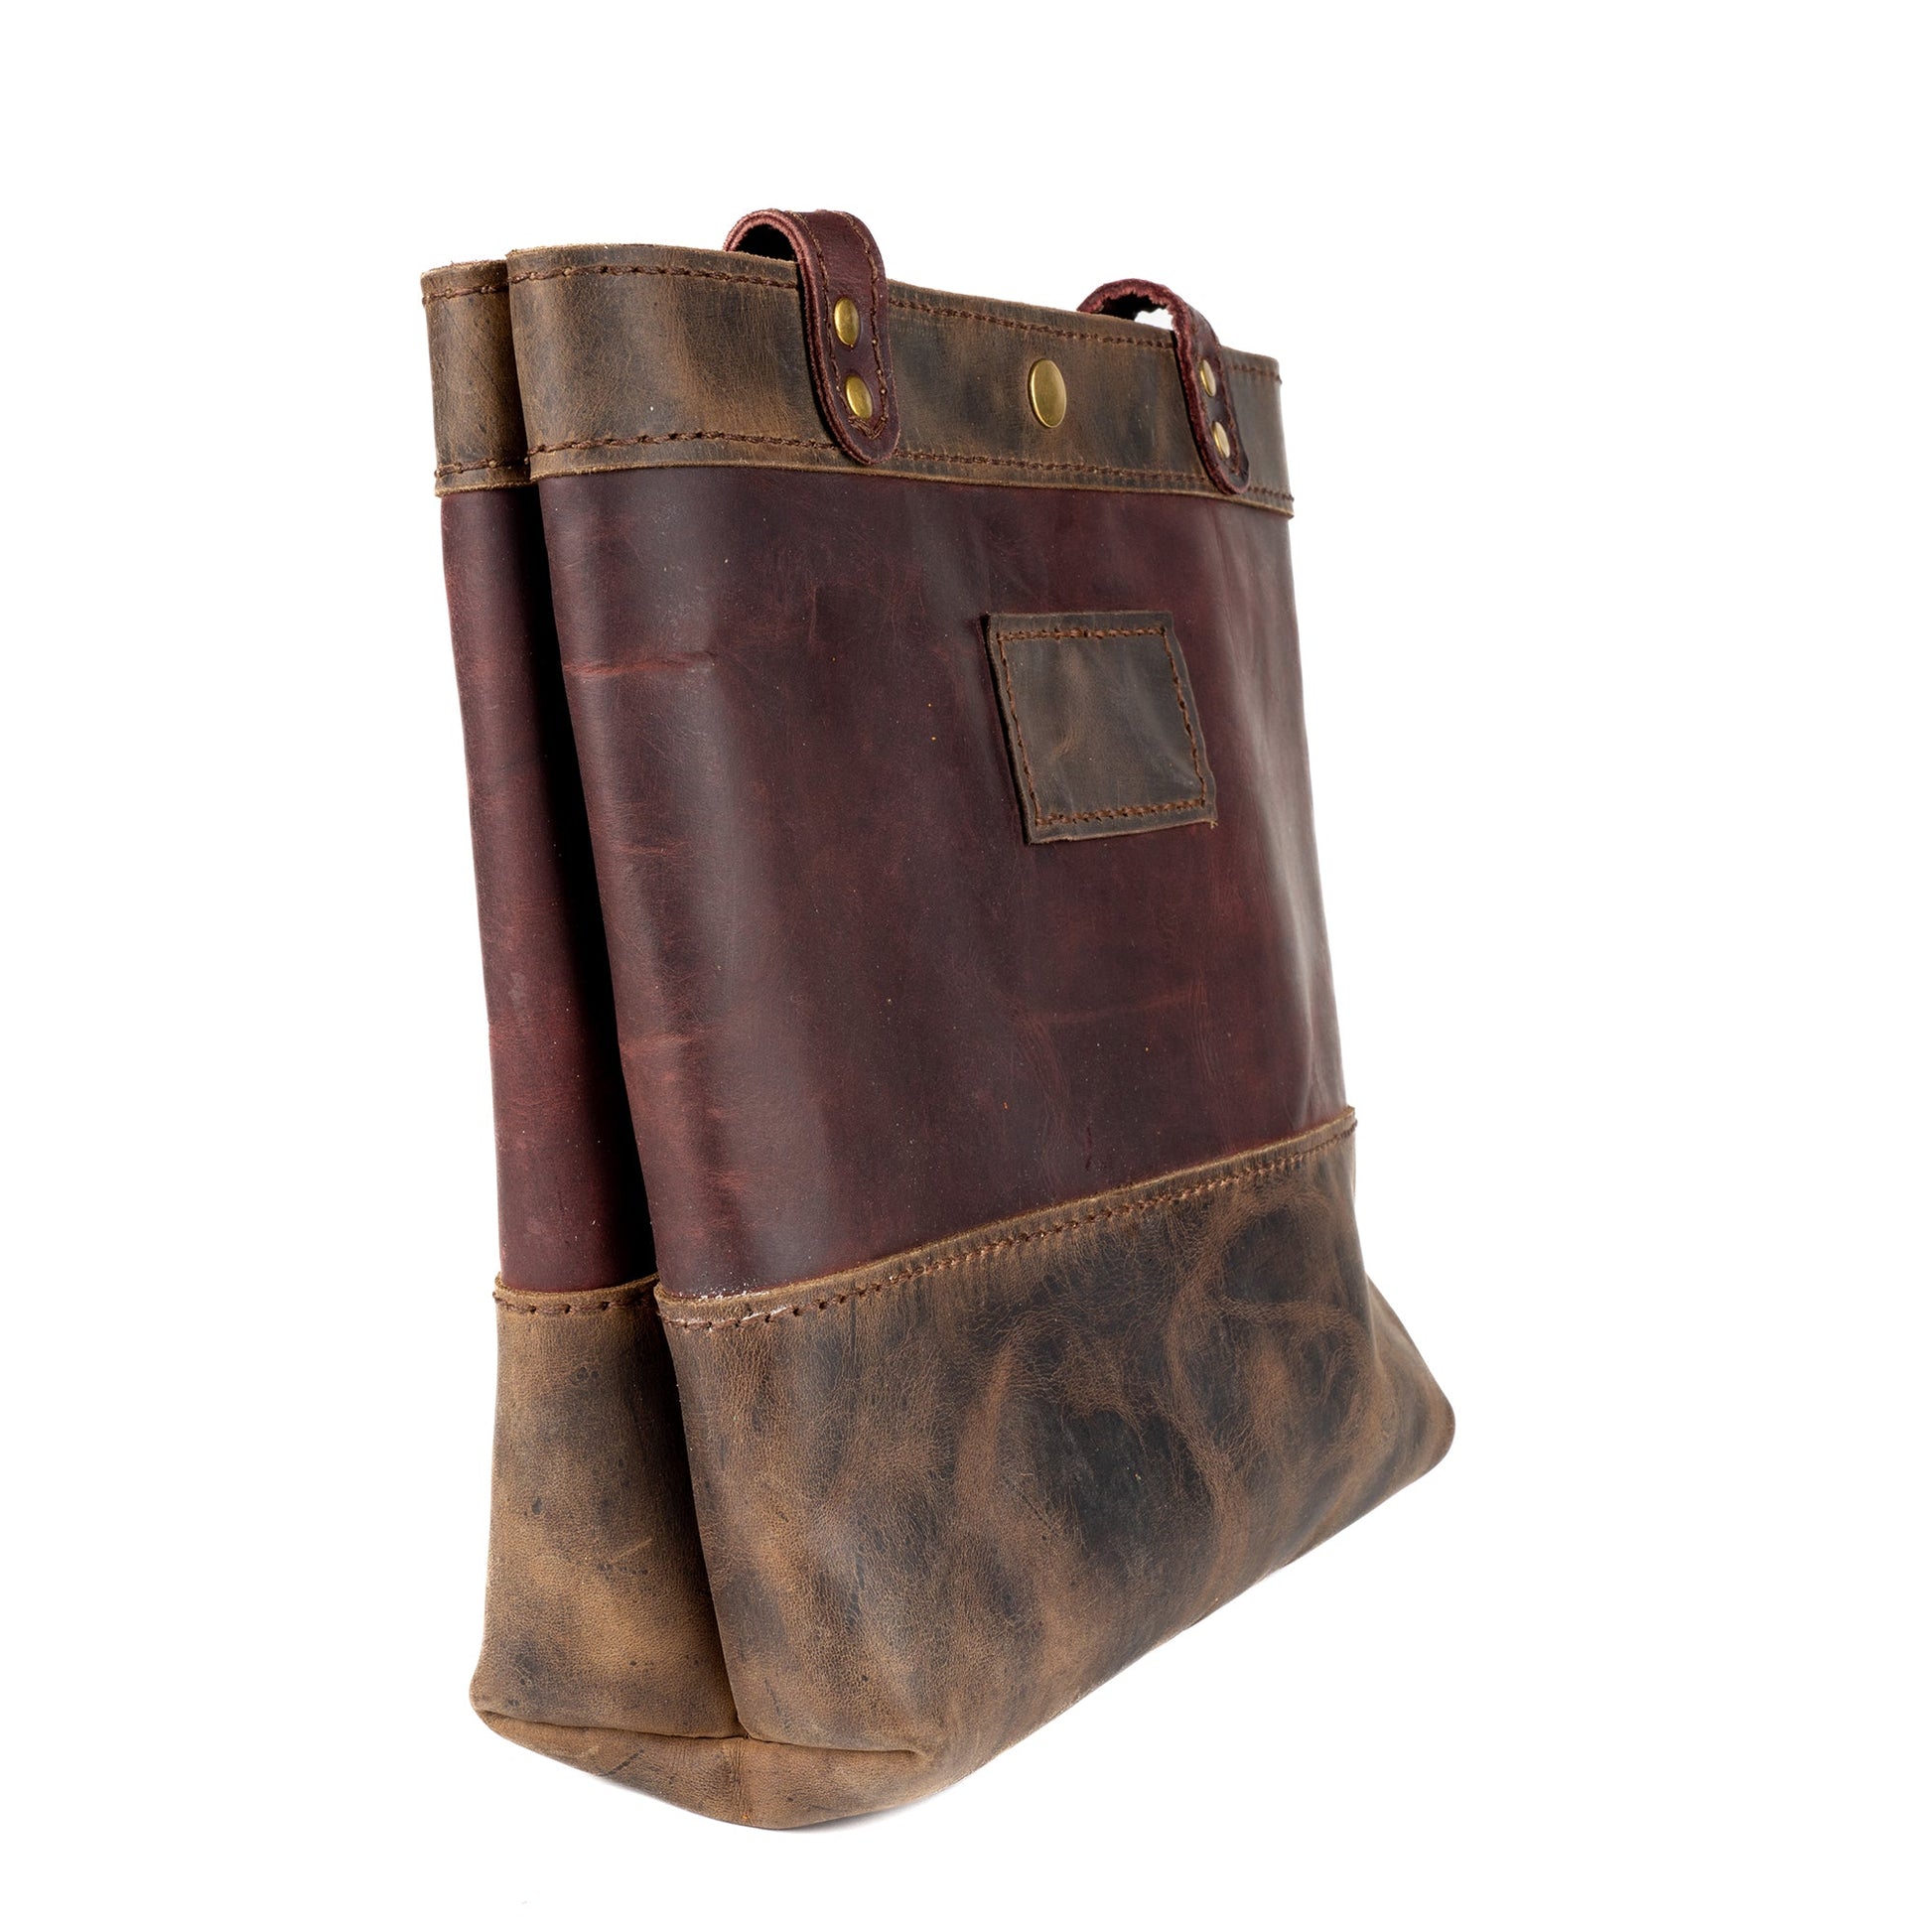 Iasos Burgundy Leather Tote Bag - Accessories Zengoda Shop online from Artisan Brands